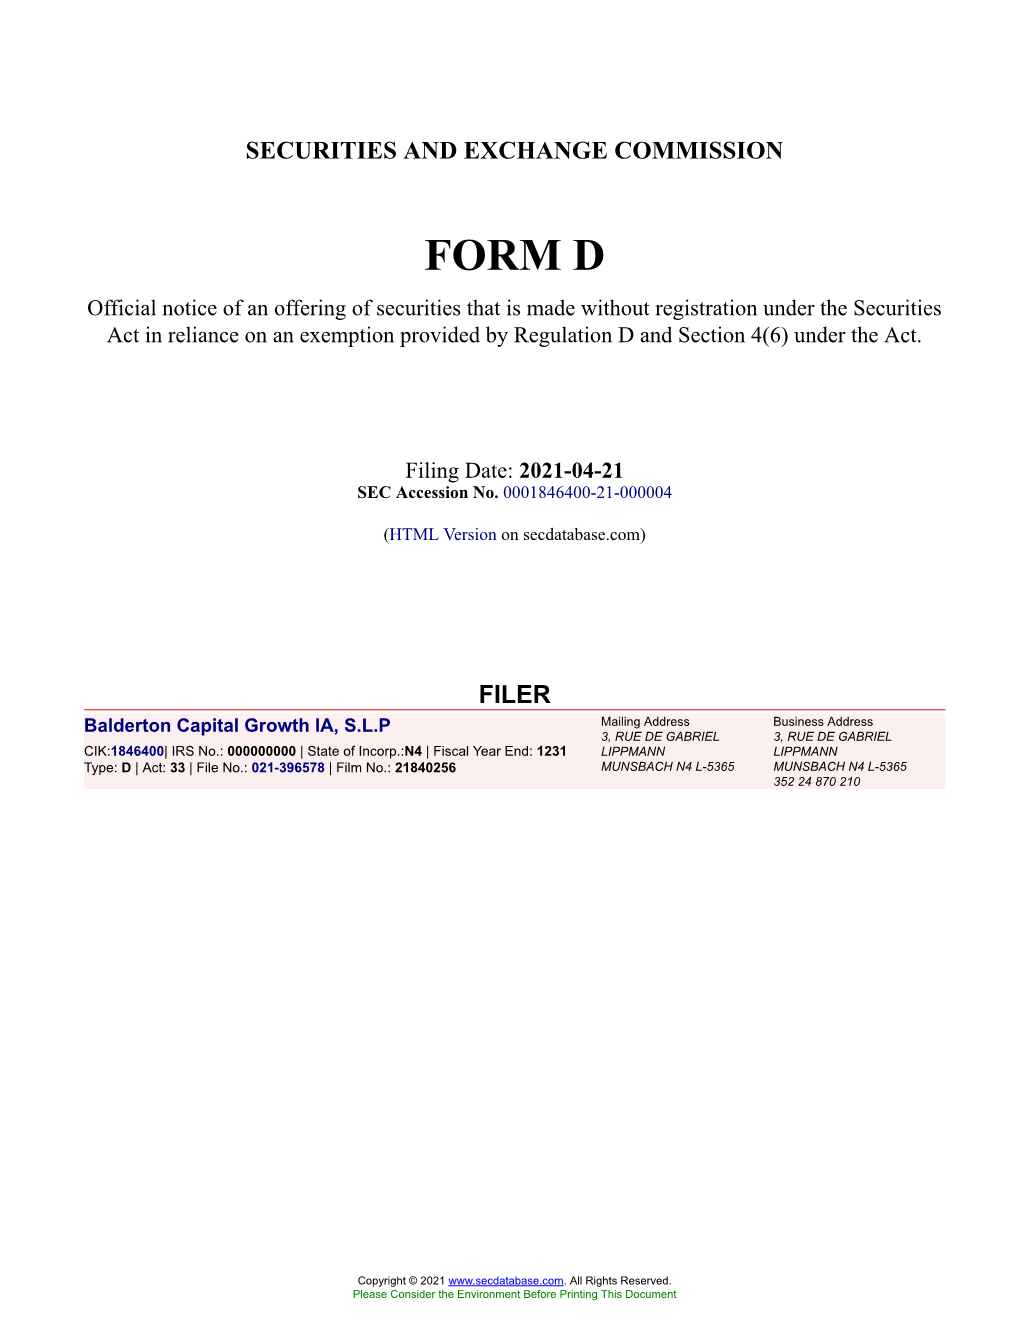 Balderton Capital Growth IA, S.L.P Form D Filed 2021-04-21